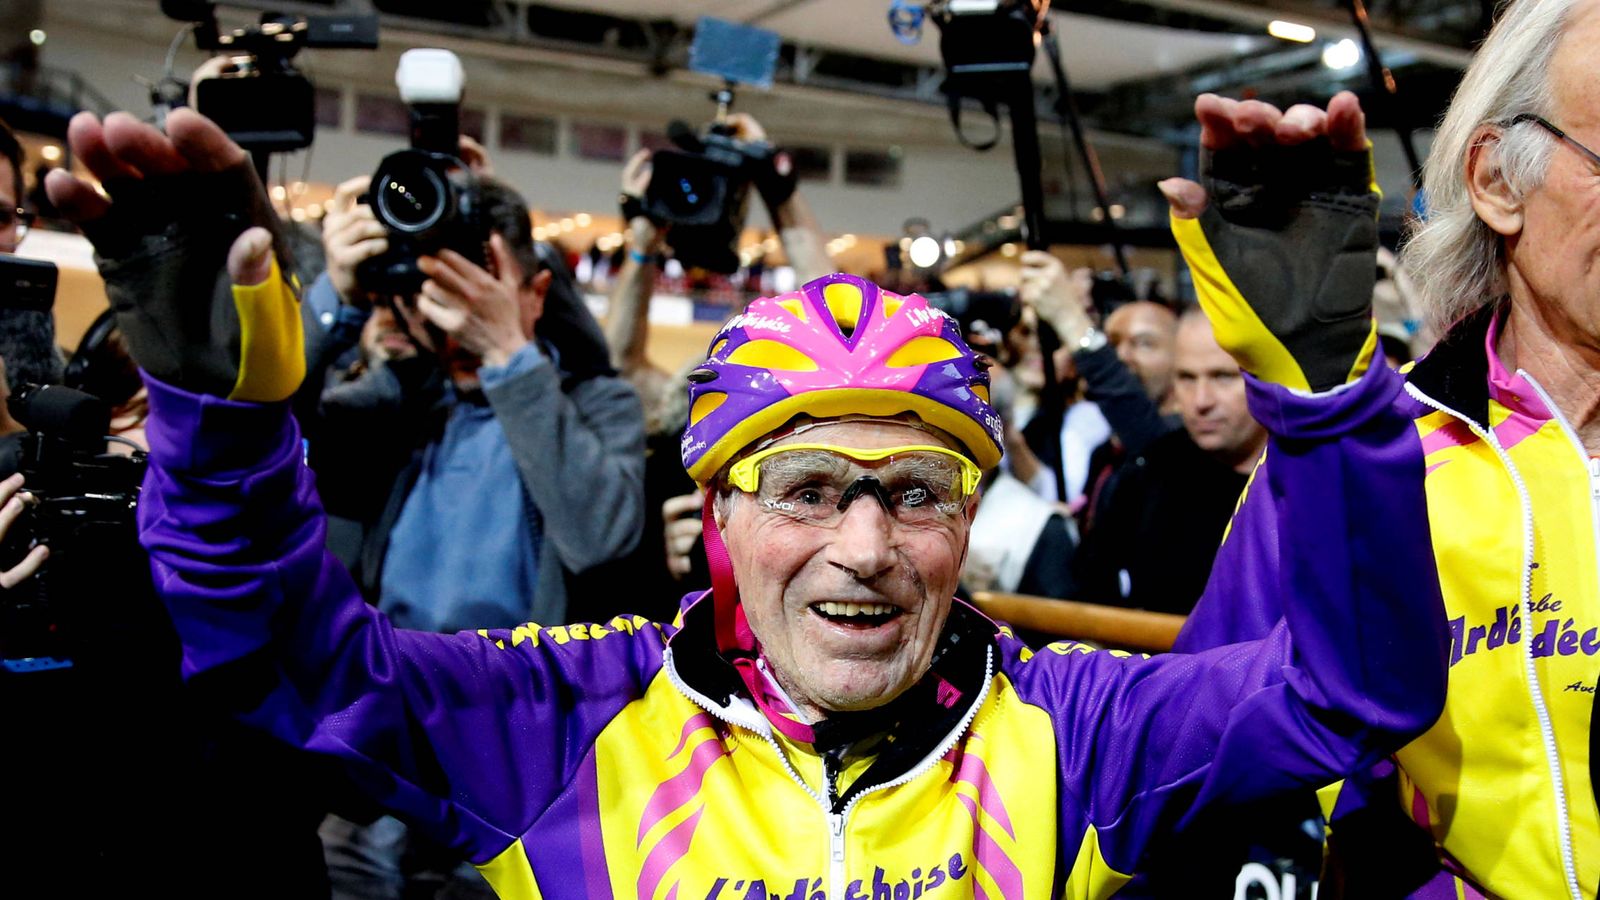 Foto: La felicidad de Robert Marchand tras establecer el récord (Jacky Naegelen/Reuters).